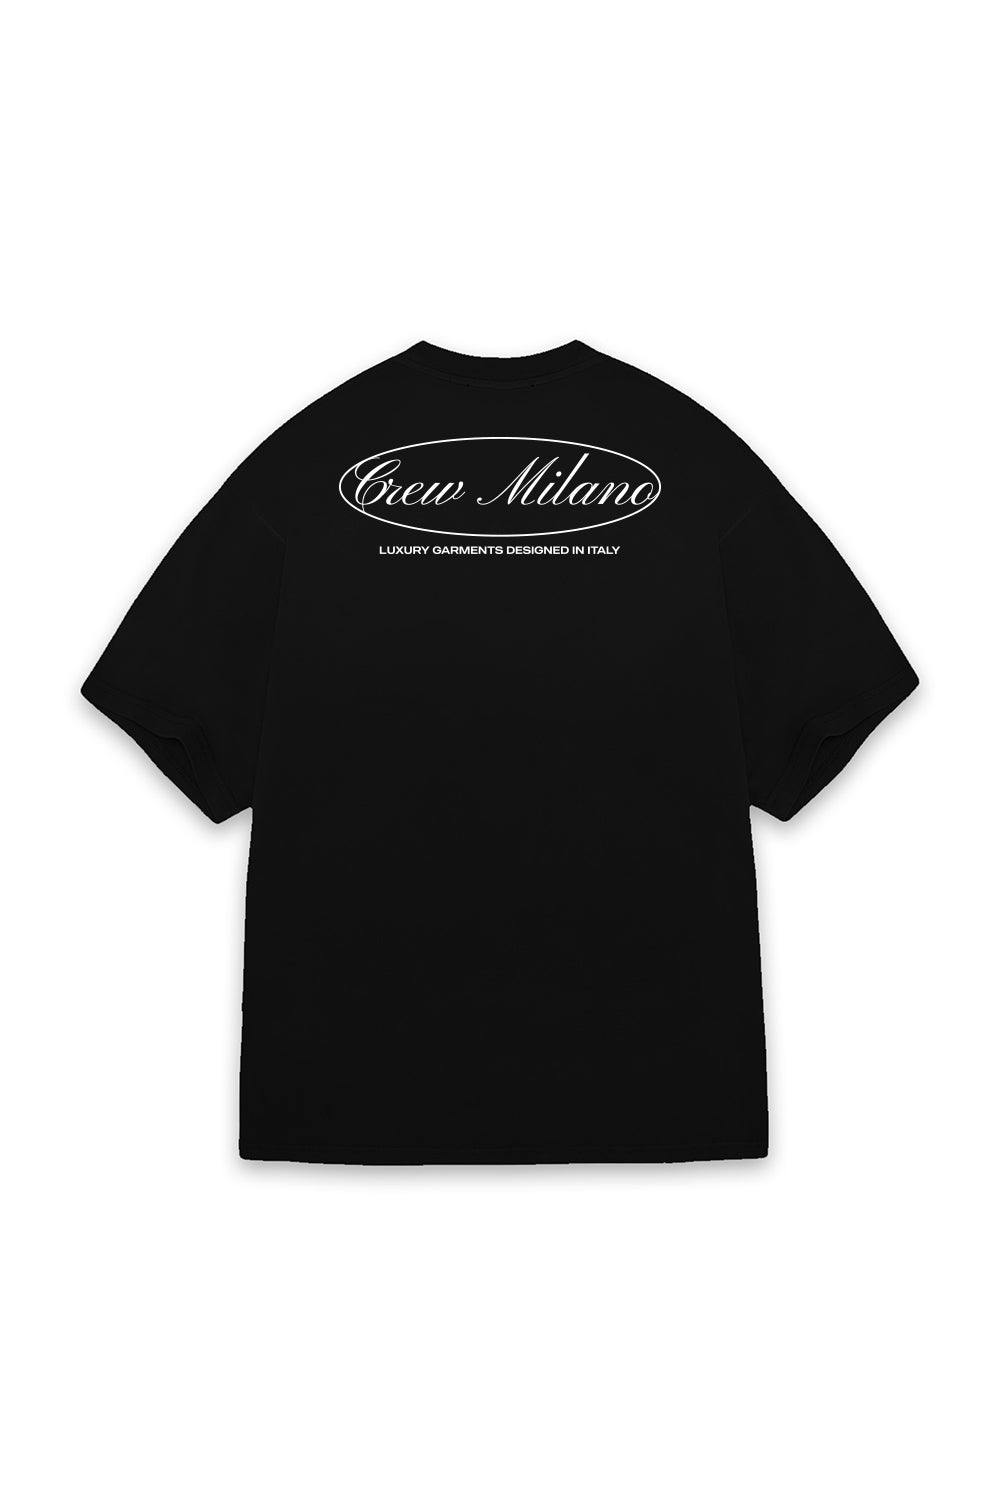 CREW Milano Circle Print Oversized T-Shirt